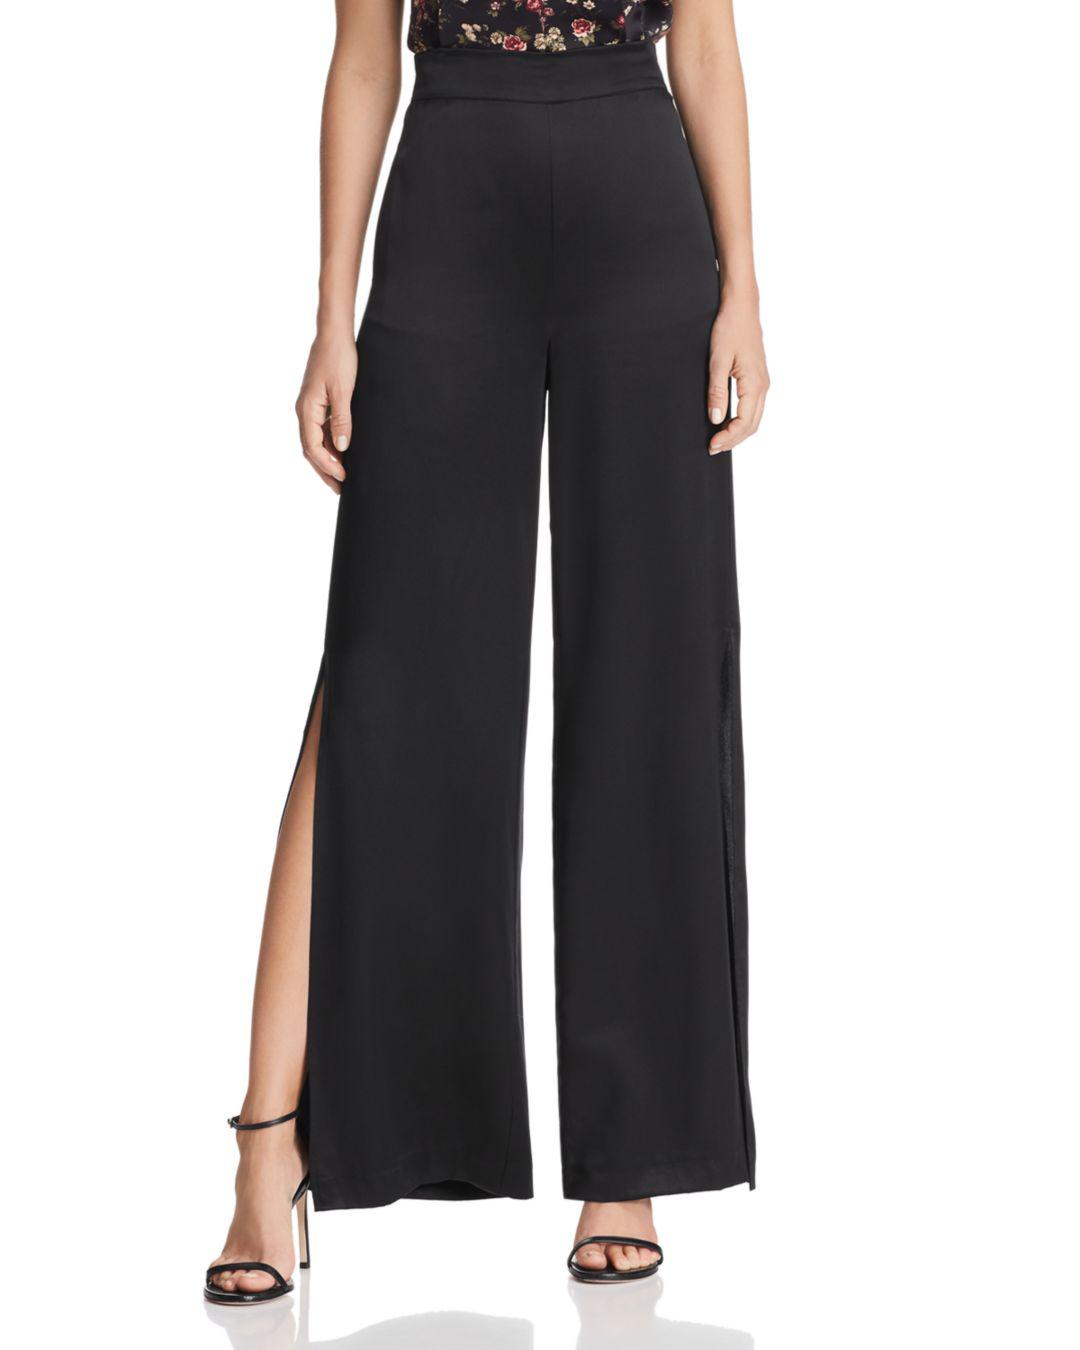 Cami NYC Miles Side-slit Wide-leg Silk Pants in Black - Lyst